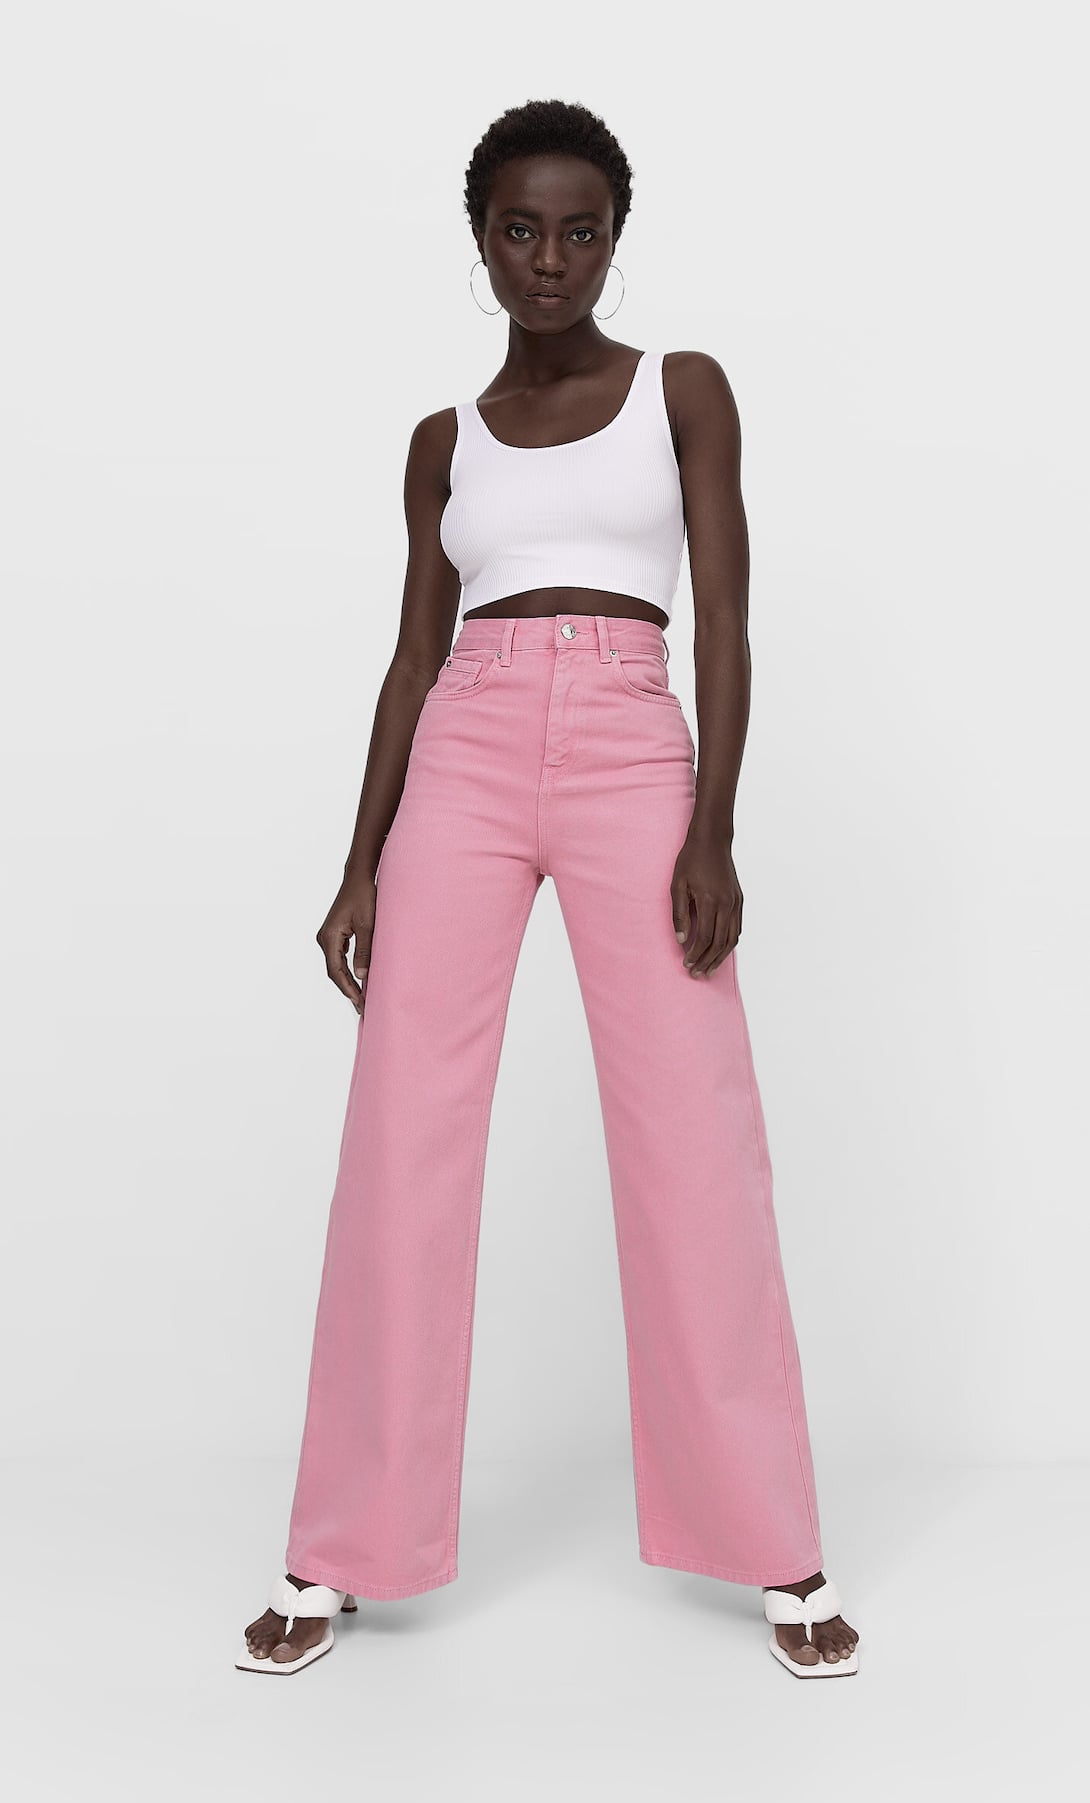 The Pink Zara Wide Leg Jeans Going Viral On TikTok